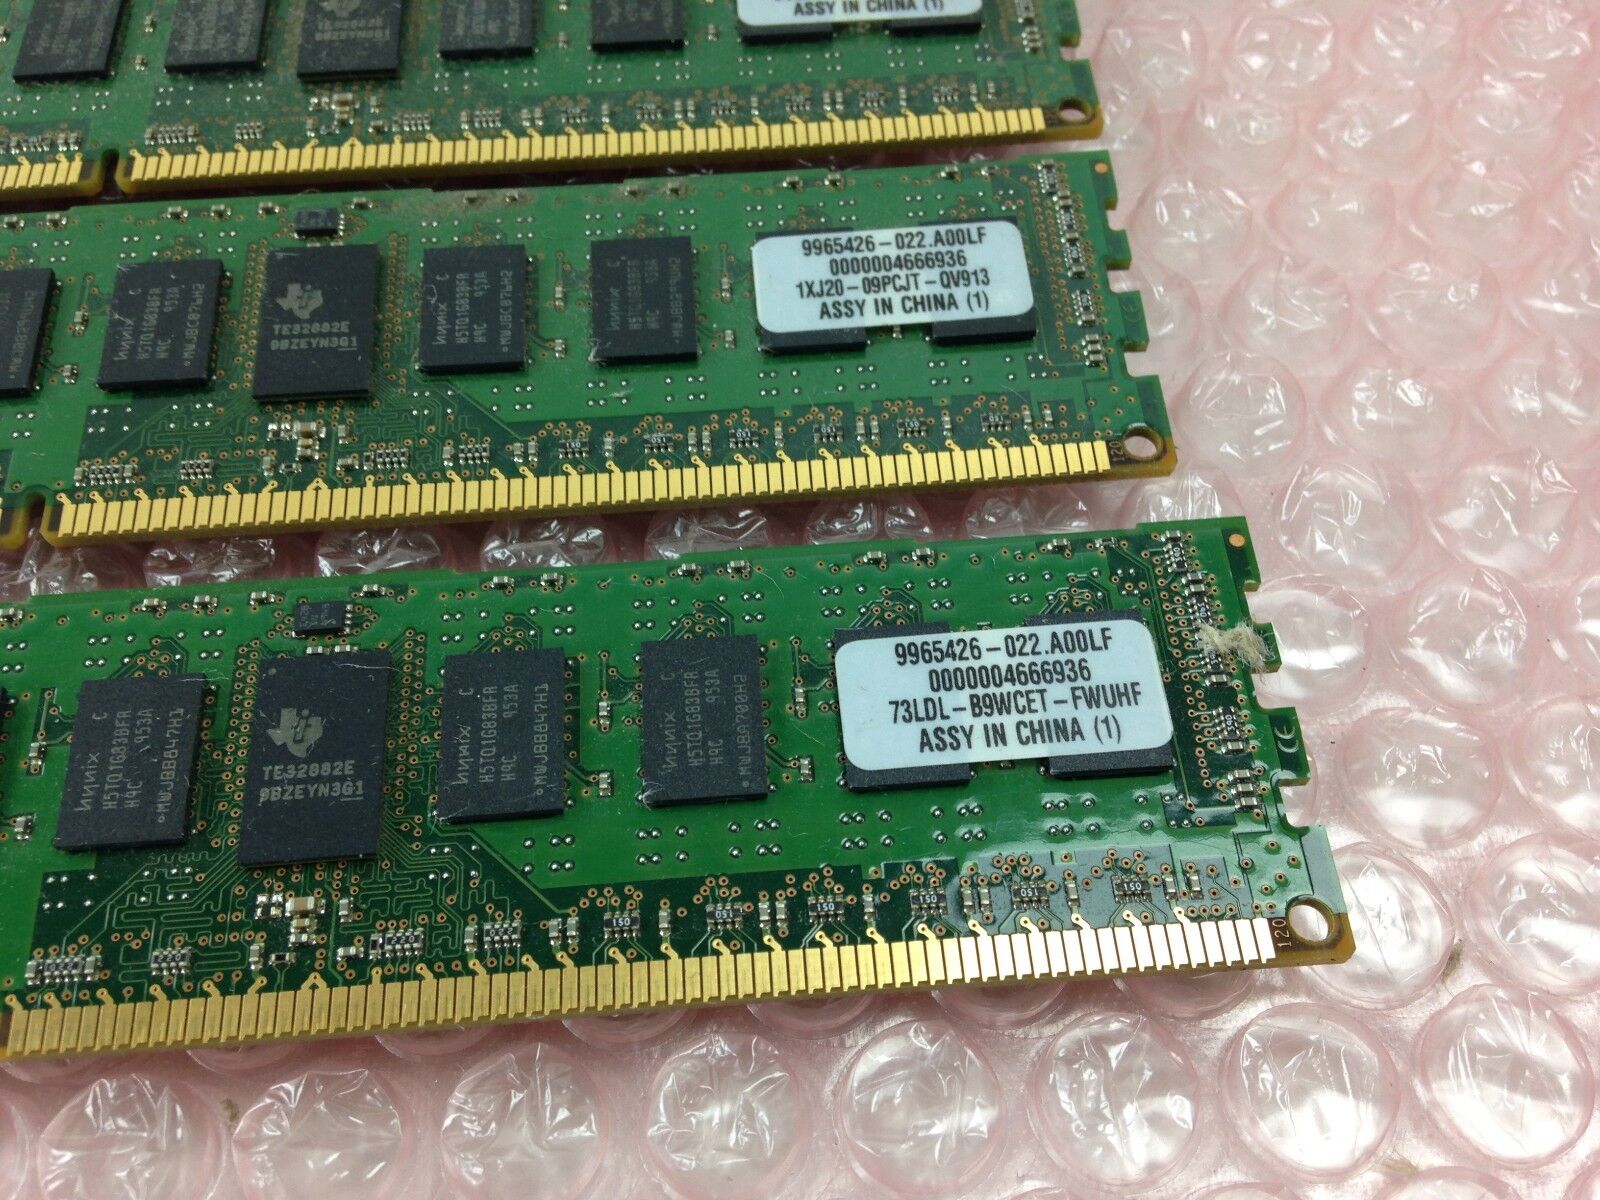 Kingston 12GB (6x2GB) kvr1066d38r7s/2g 1.5V KVR Series Server Memory RAM